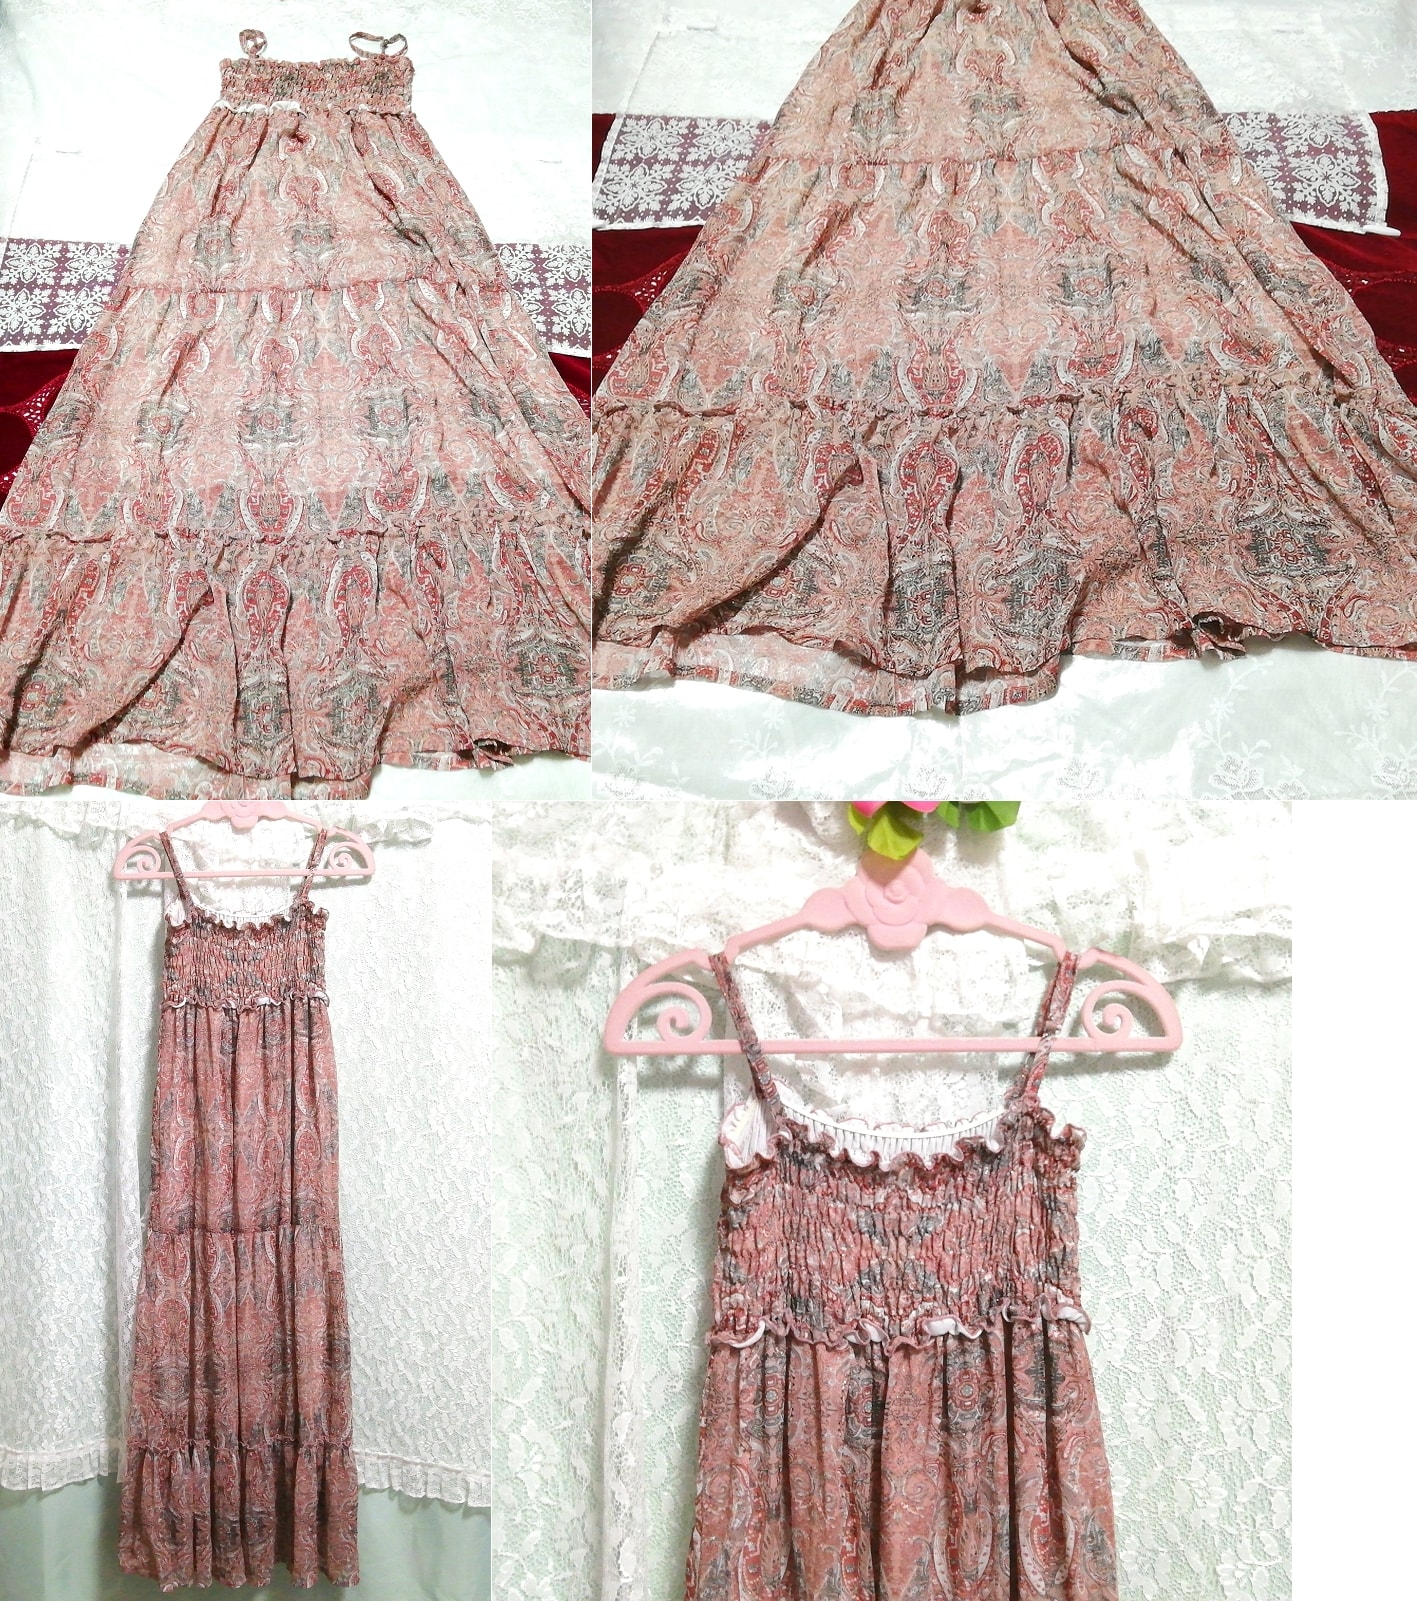 Brown ethnic pattern chiffon negligee nightgown camisole maxi dress, long skirt, l size